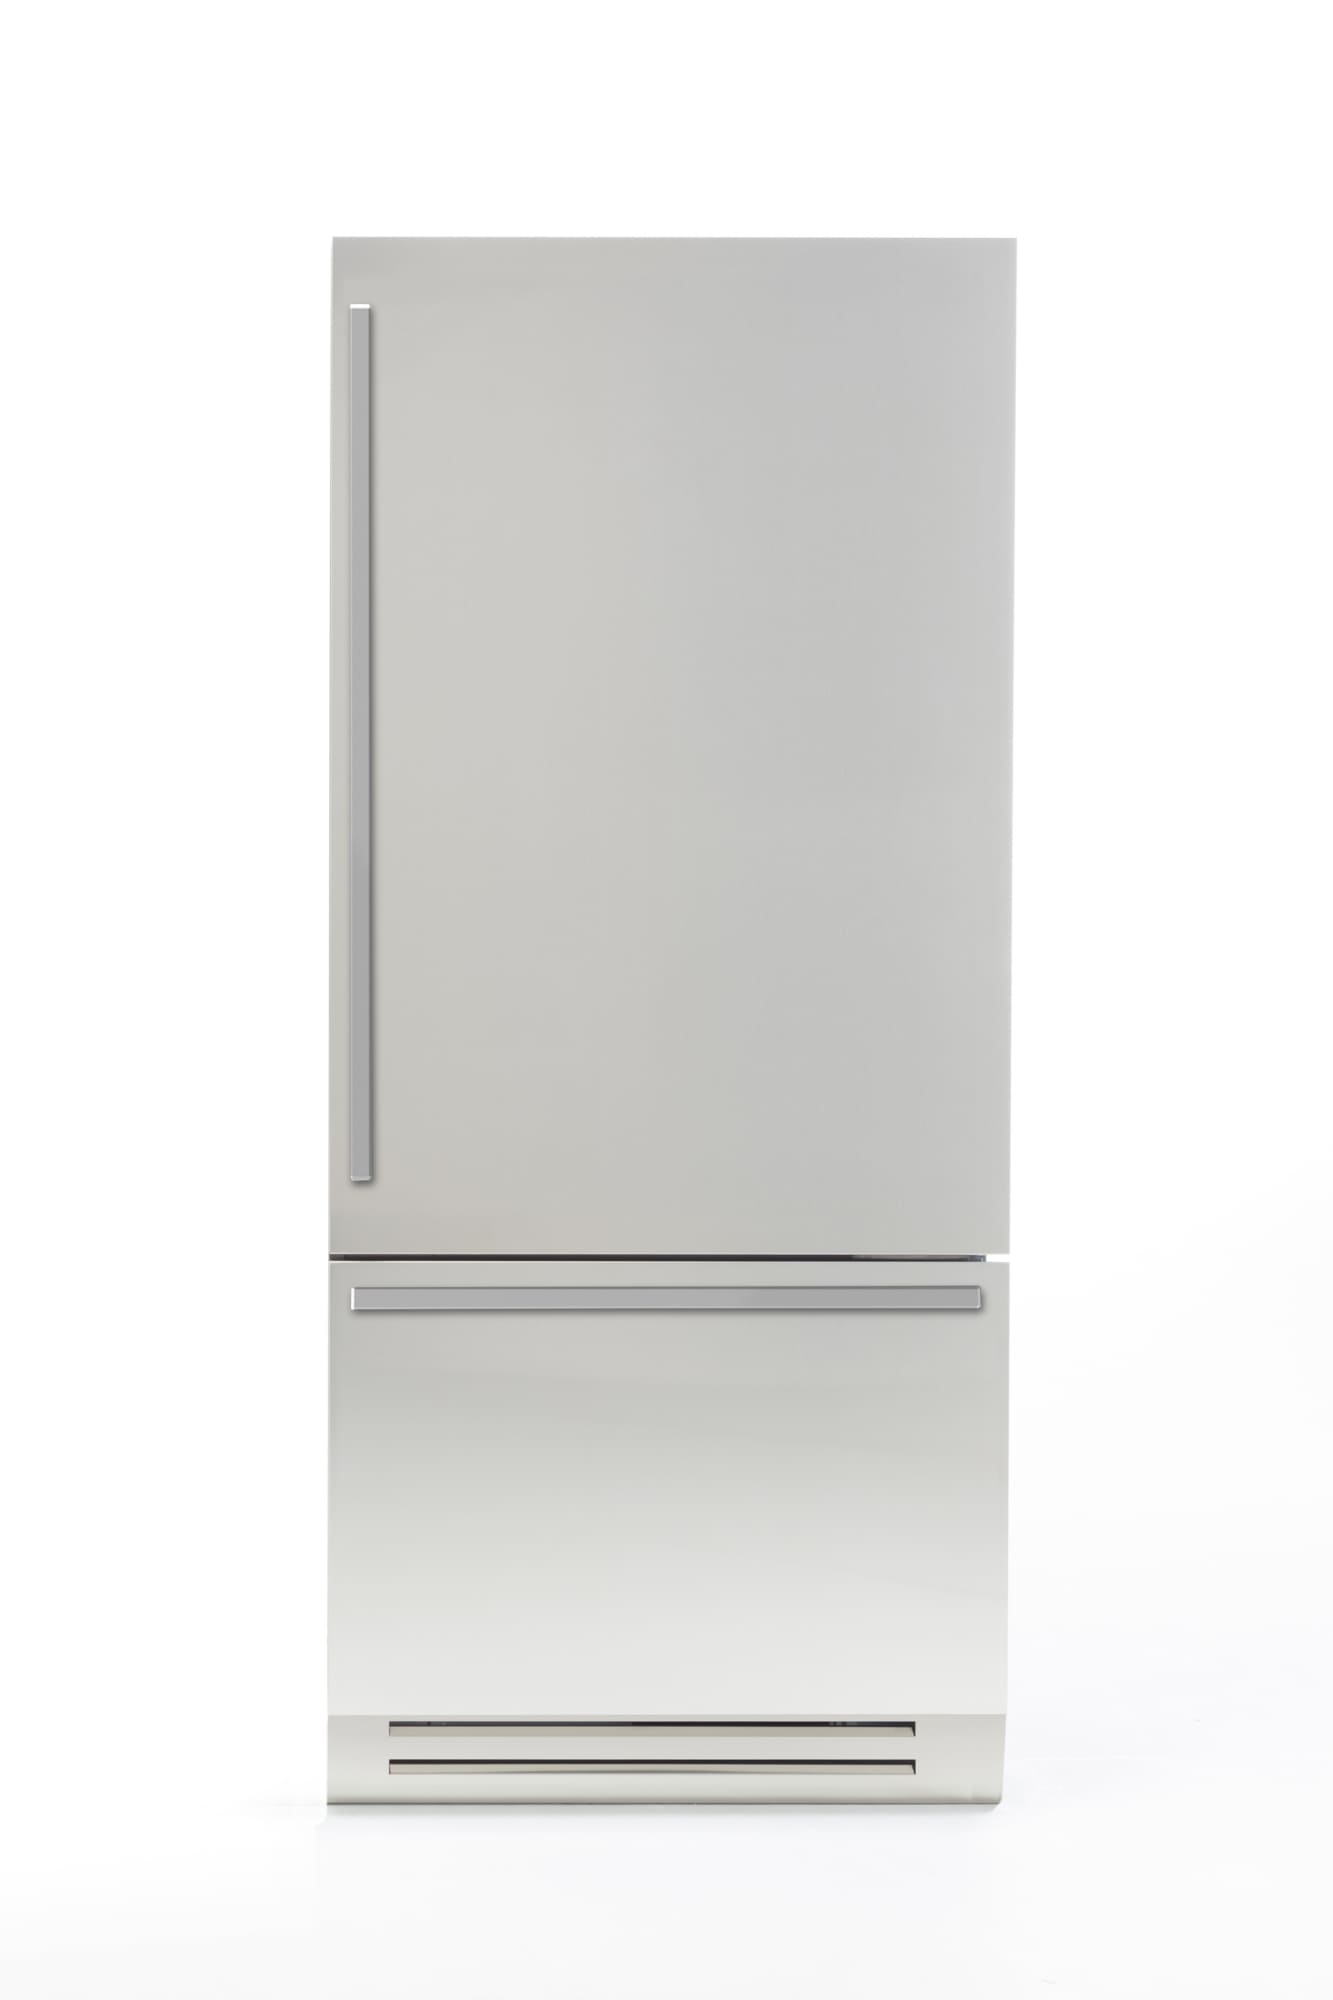 Bertazzoni | 30" Built-in refrigerator - Stainless - Left swing door, 30" Over the Range Microwave Hood - 300 CFM - 2019 model, and 30" Master Series range - Gas oven - 4 aluminum burners - Black knobs Bundle